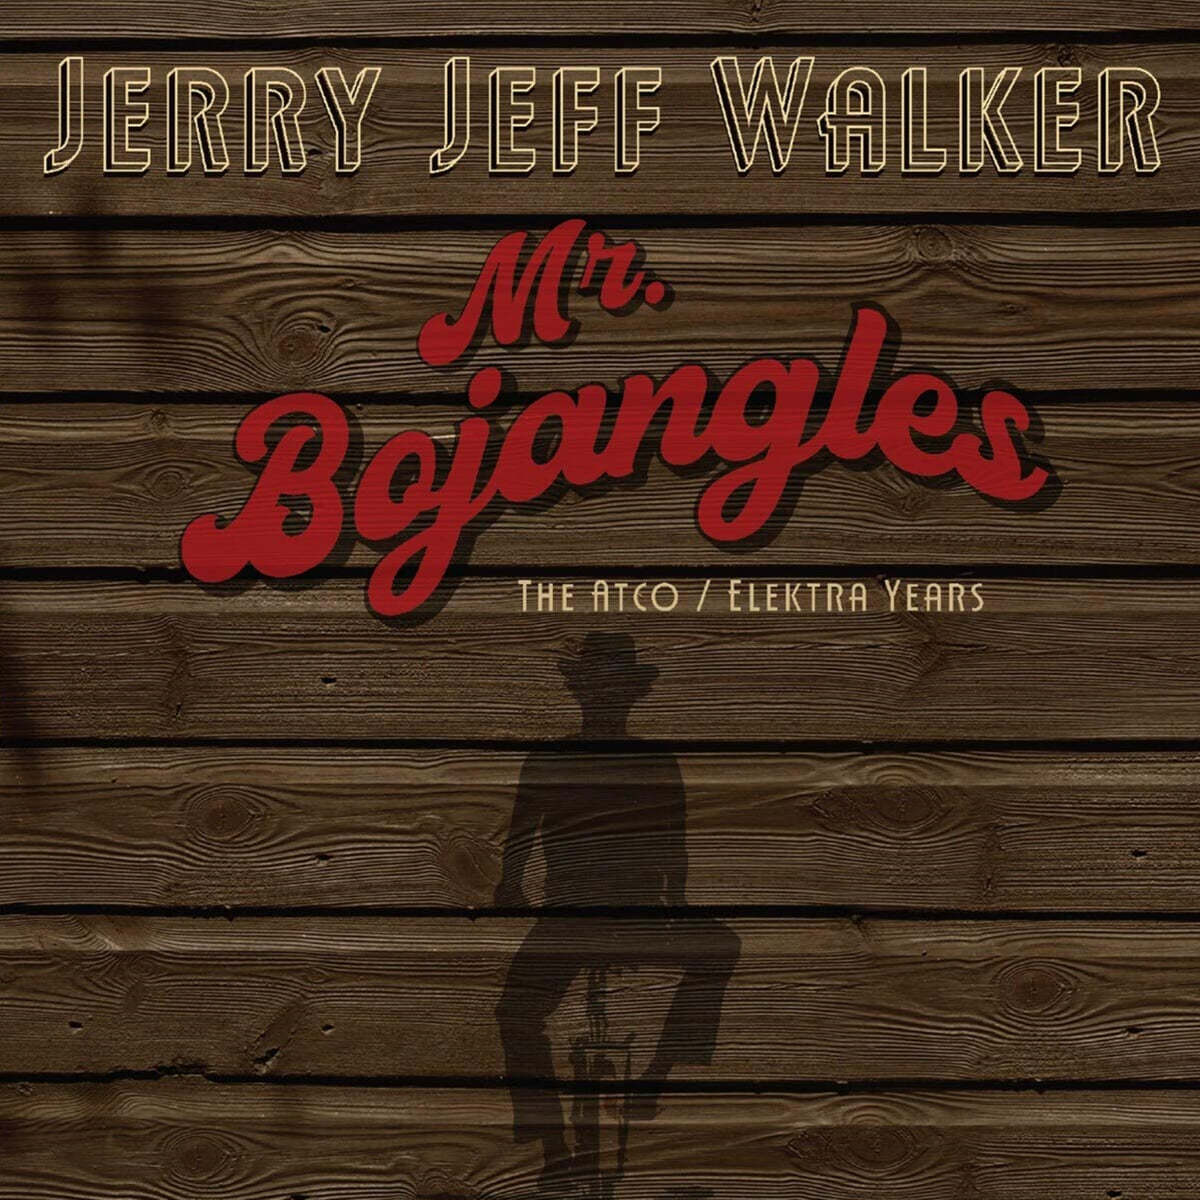 Jerry Jeff Walker (제리 제프 워커) - Mr. Bojangles -  The Atco / Elektra Years 